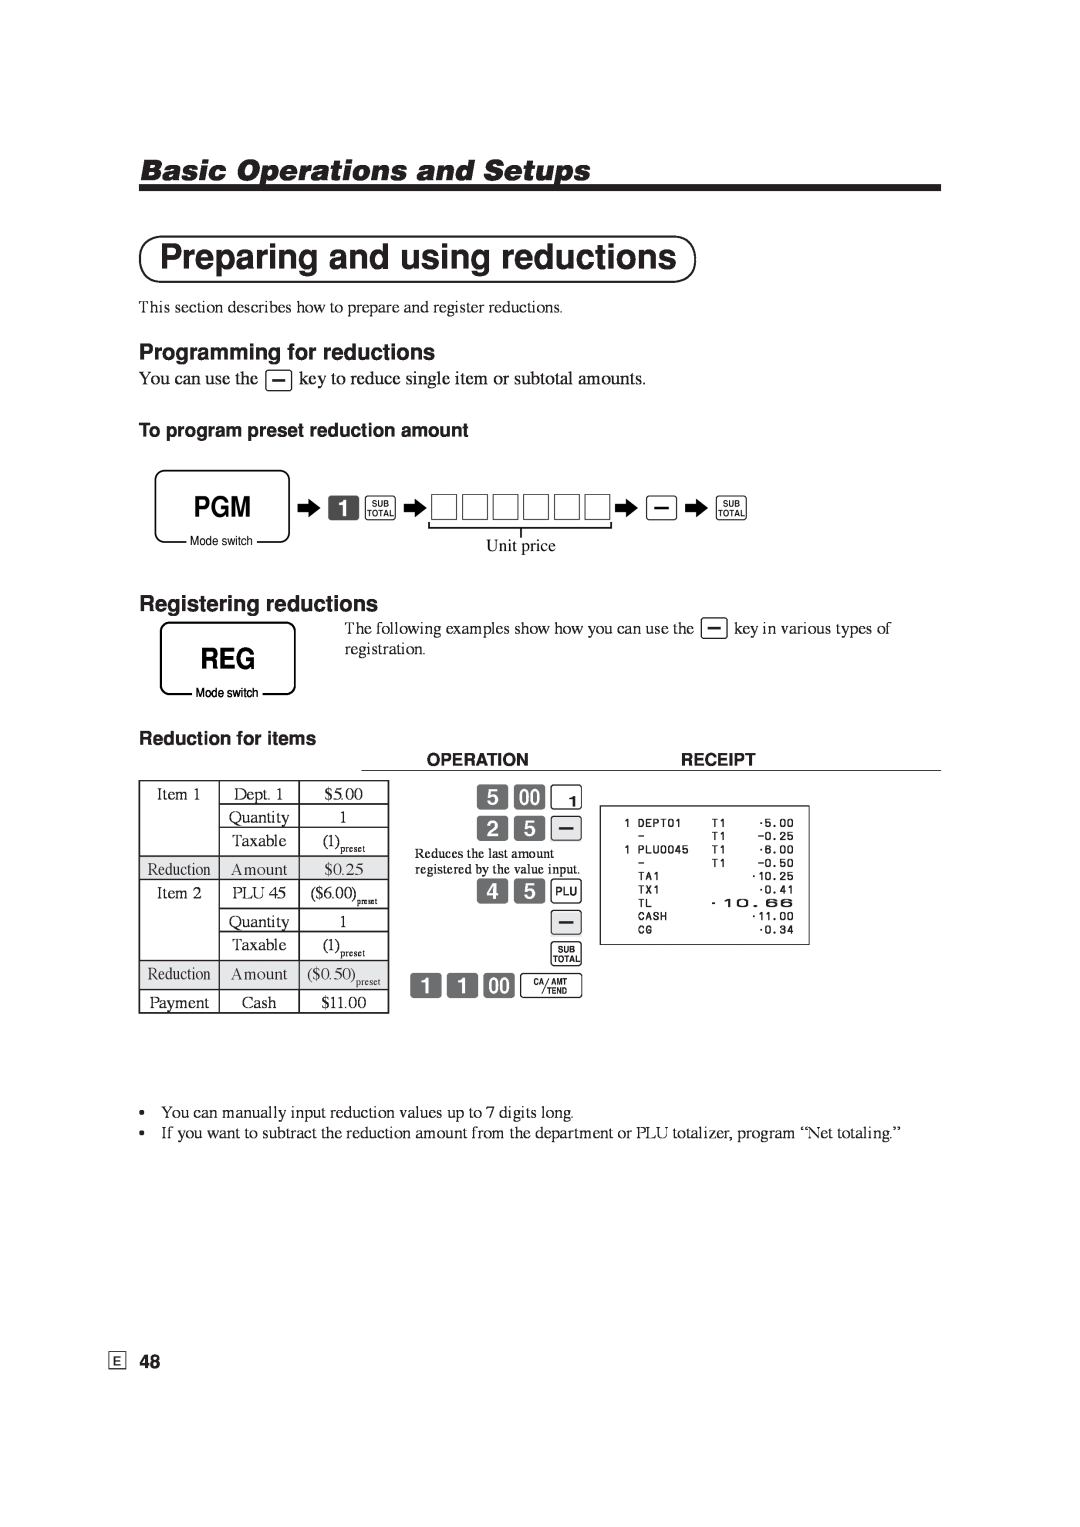 Casio SE-S6000 Preparing and using reductions, Programming for reductions, Registering reductions, 11-F, PGM 6 1s6 6 m6 s 